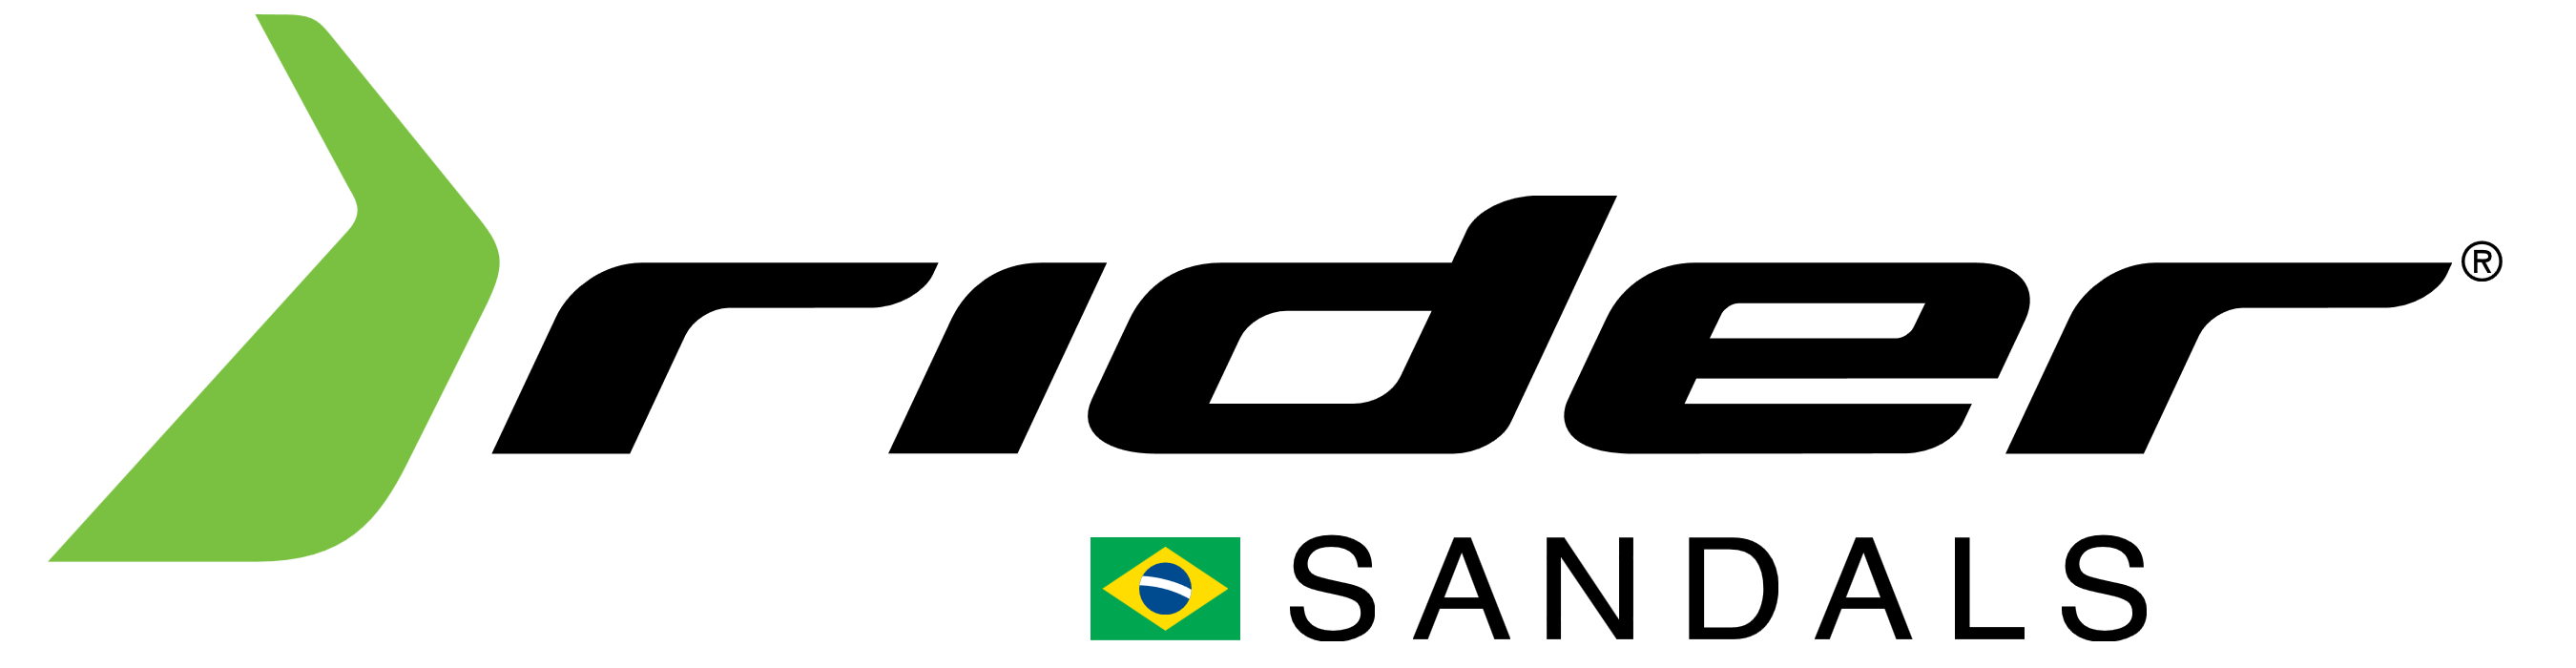 Rider Logo - Rider Sandals – Logos Download